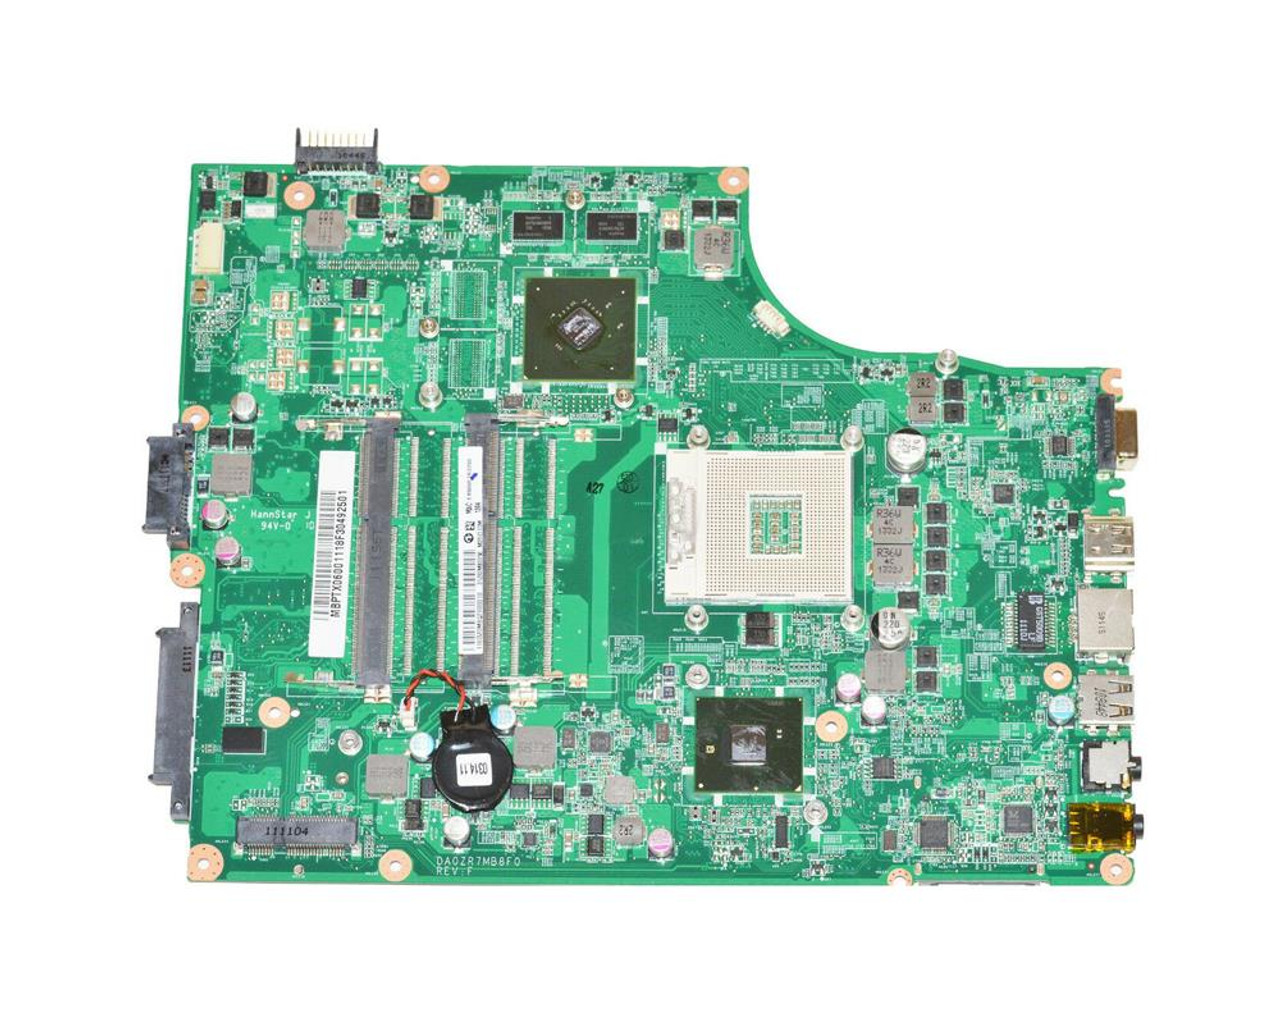 MB.PTX06.001 Acer System Board (Motherboard) for Aspire 5745g Notebook (Refurbished)